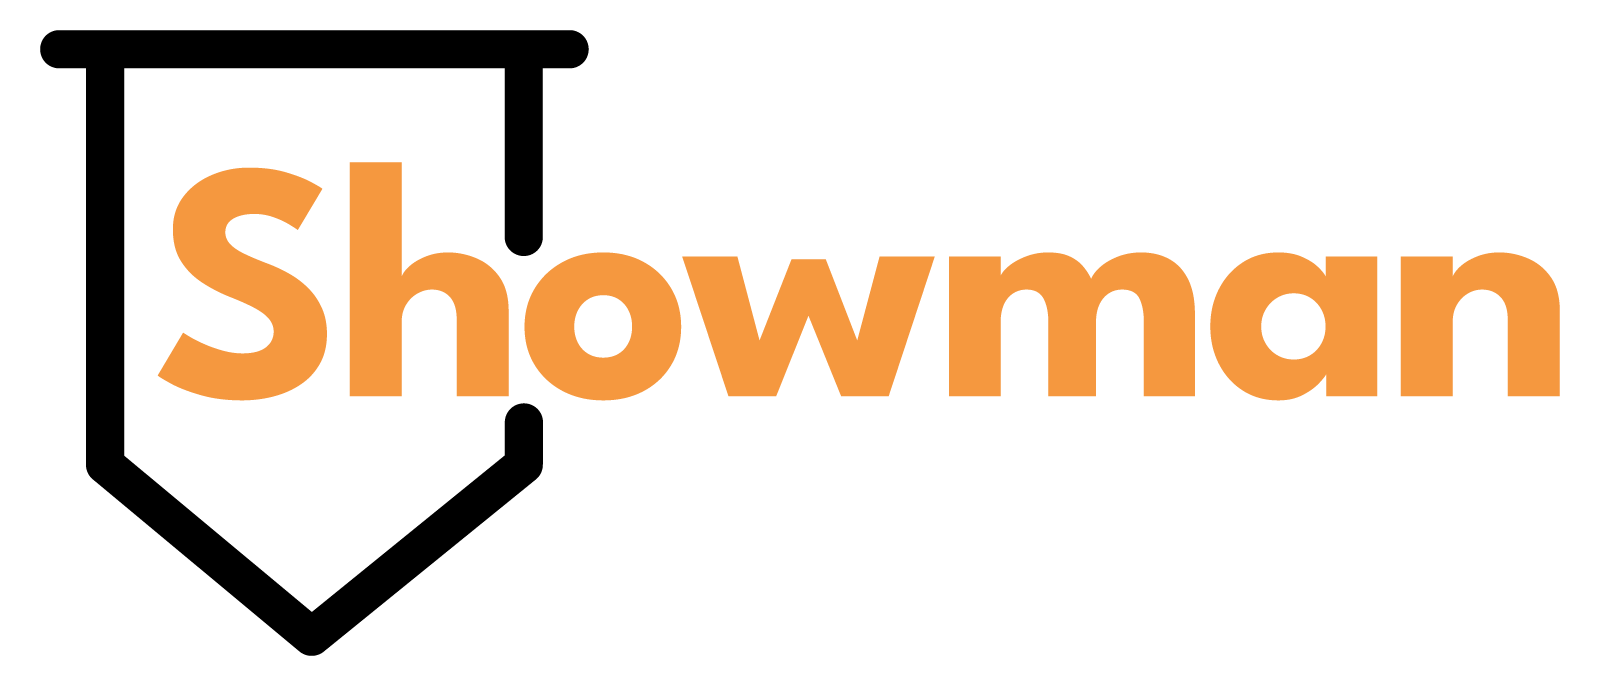 Showman App Logo